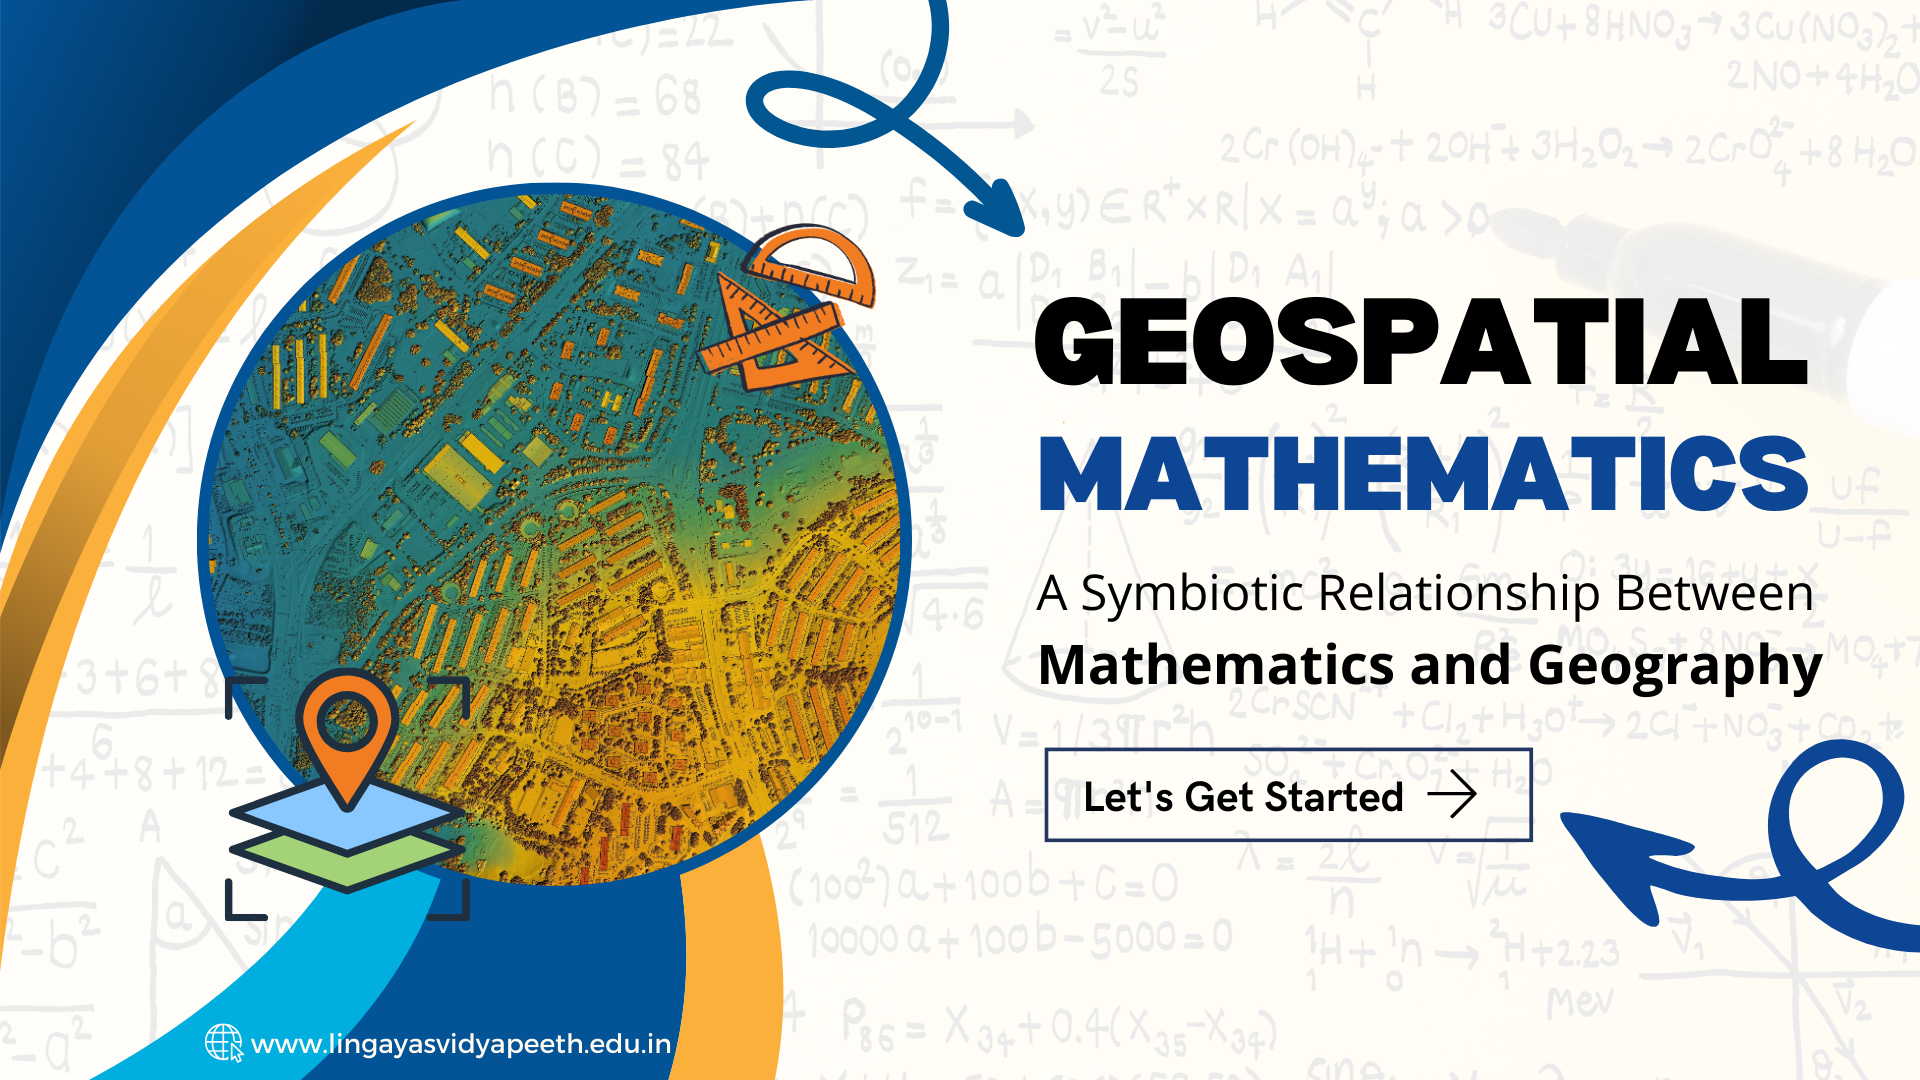 Geospatial Mathematics: A Symbiotic Relationship Between Mathematics and Geography